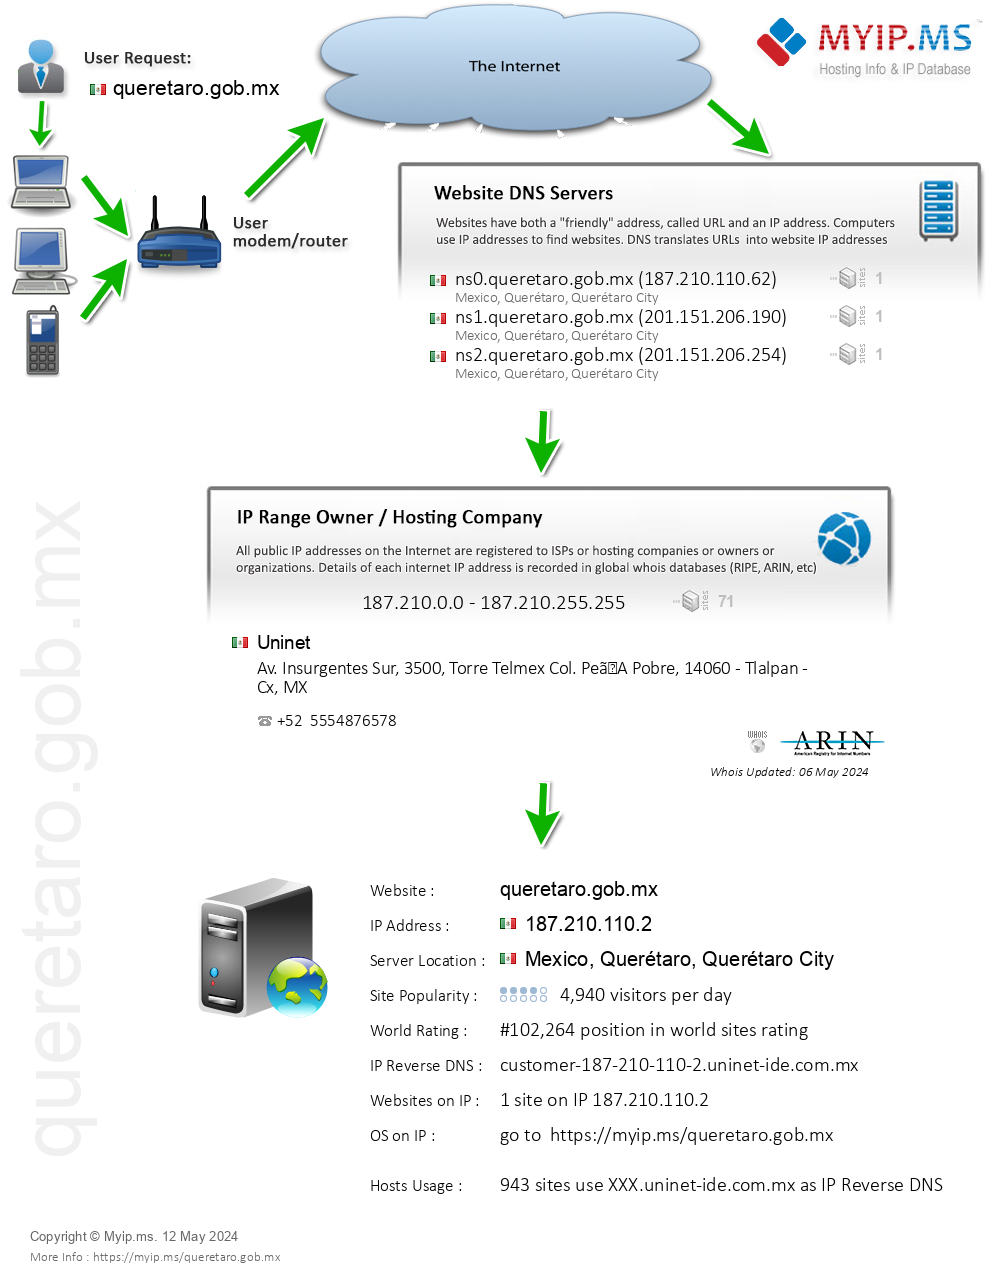 Queretaro.gob.mx - Website Hosting Visual IP Diagram